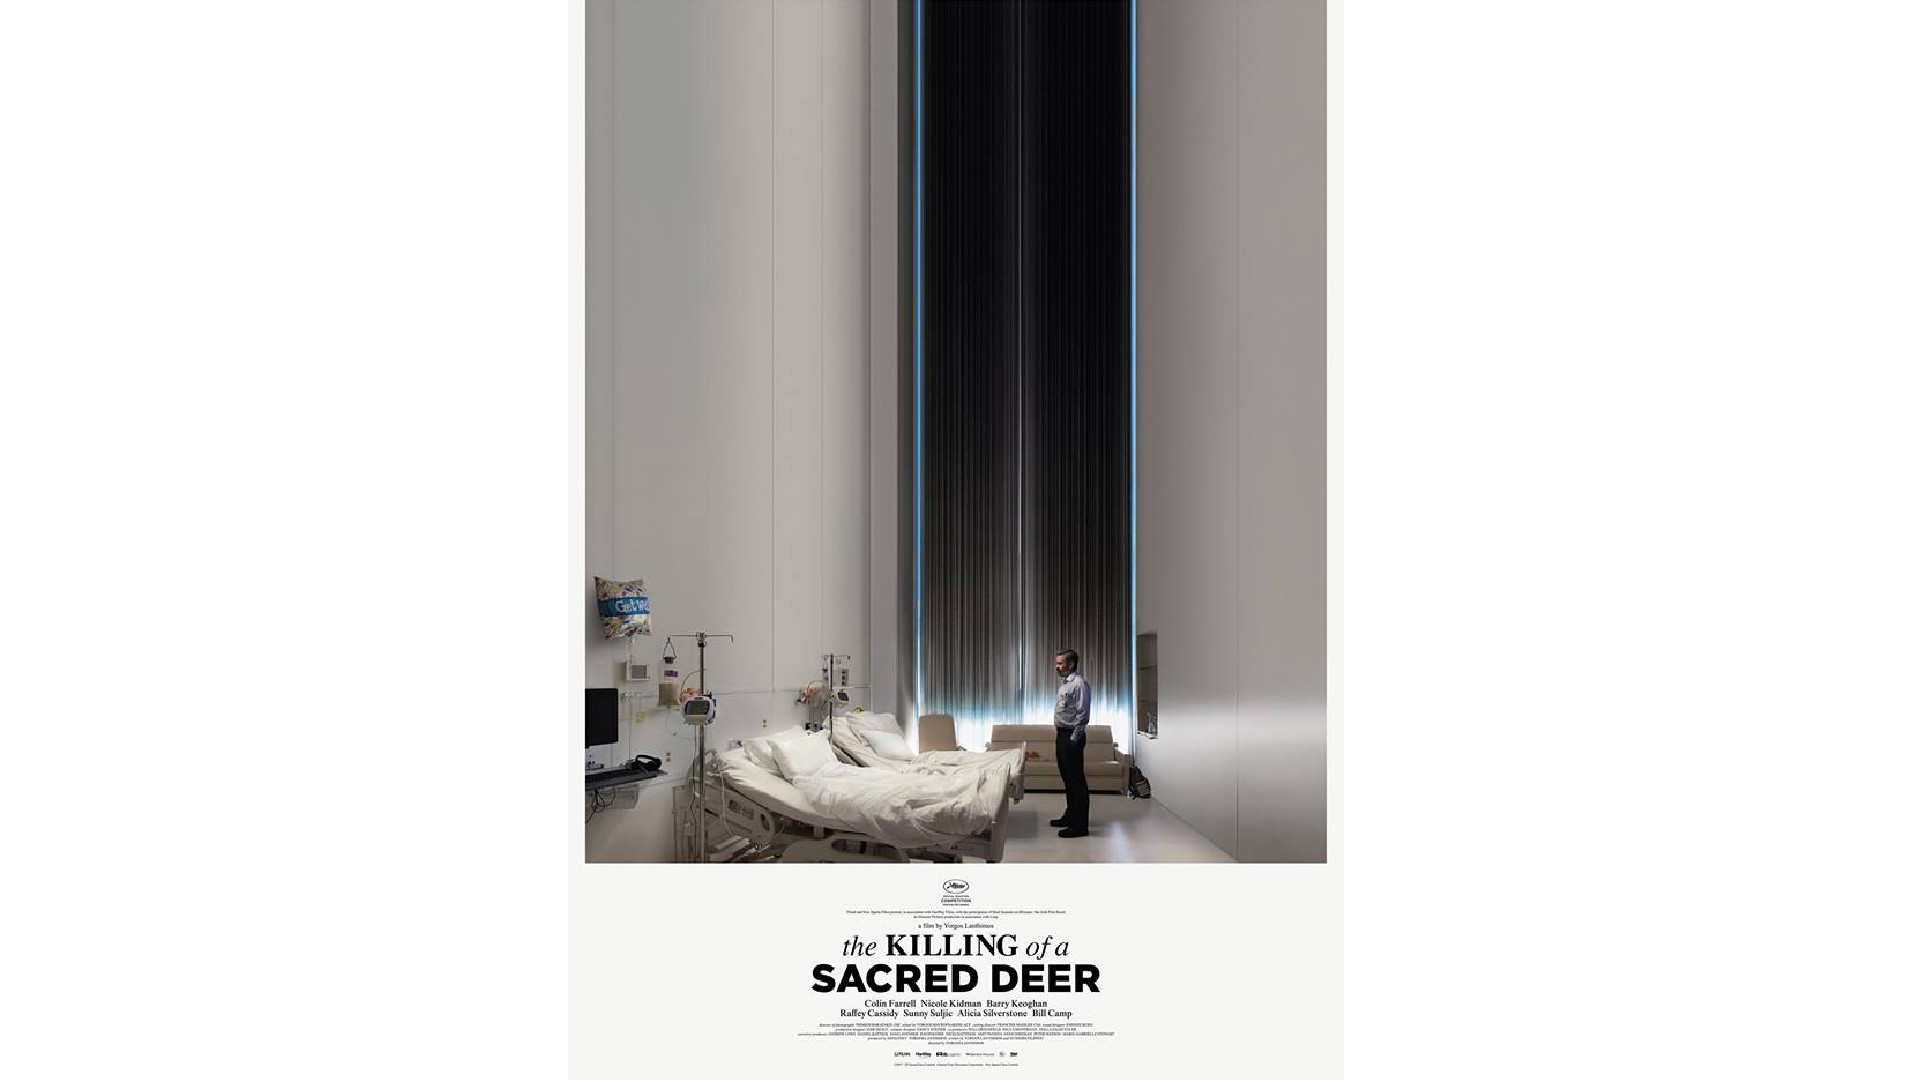 Horror film poster for The Killing of a Sacred Deer